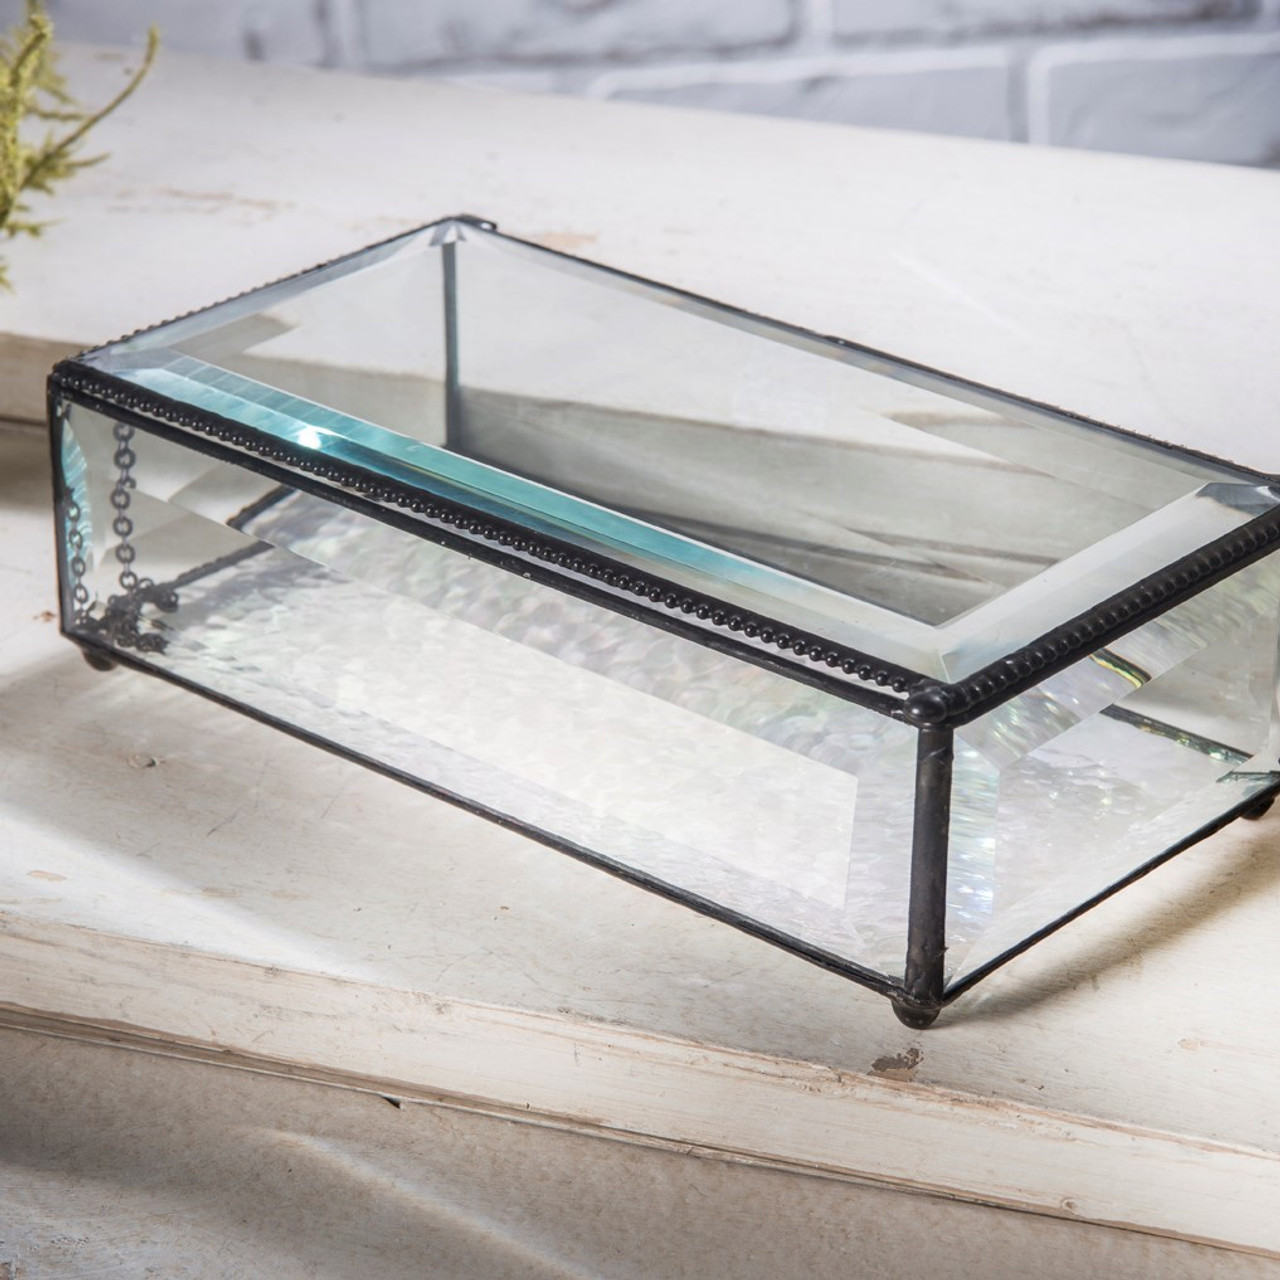 J Devlin Box 515 Vintage Glass Purse Trinket Box Decorative Keepsake